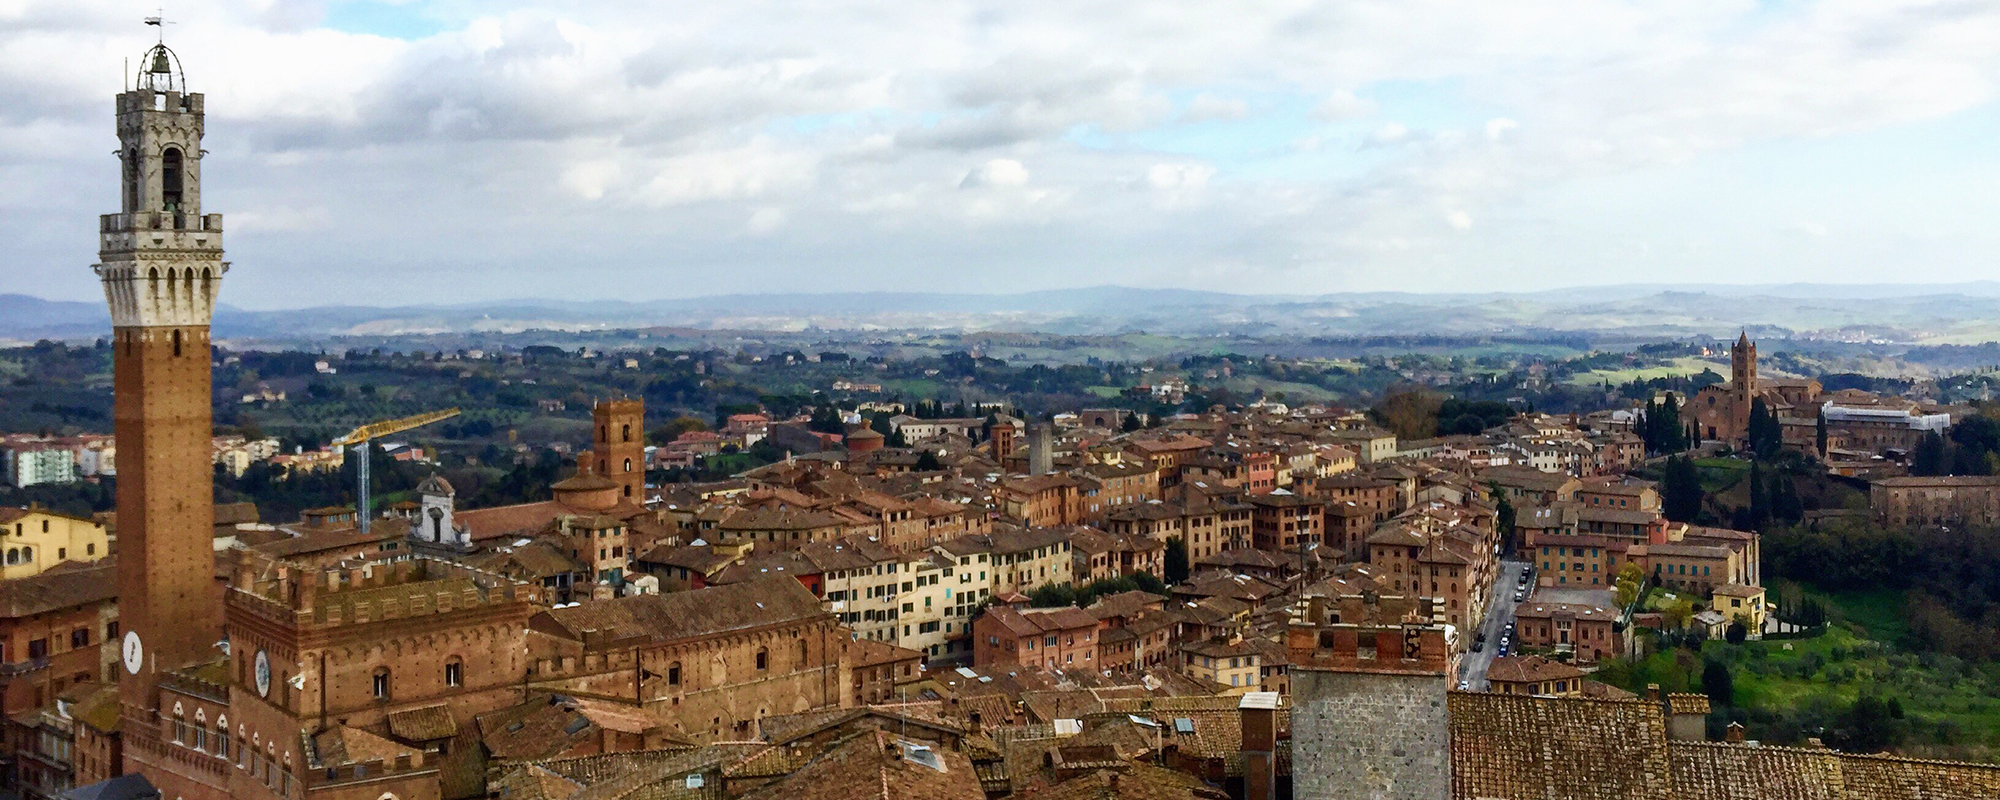 Panoramic view of Siena